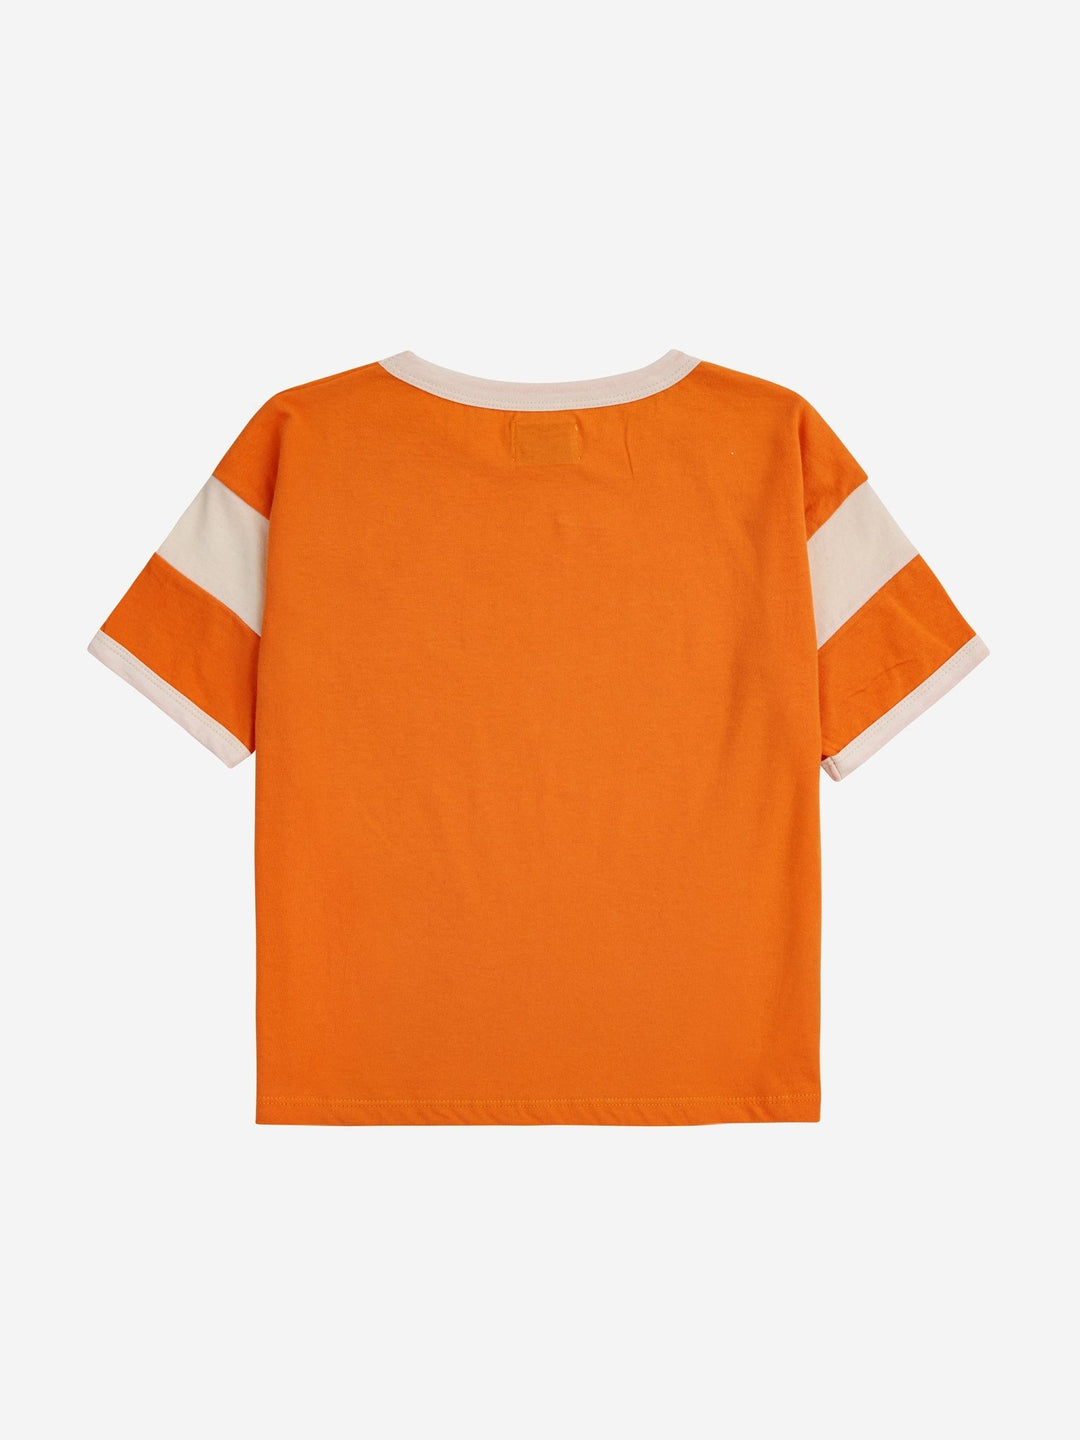 Bobo Choses T-Shirt - Orange - Posh New York